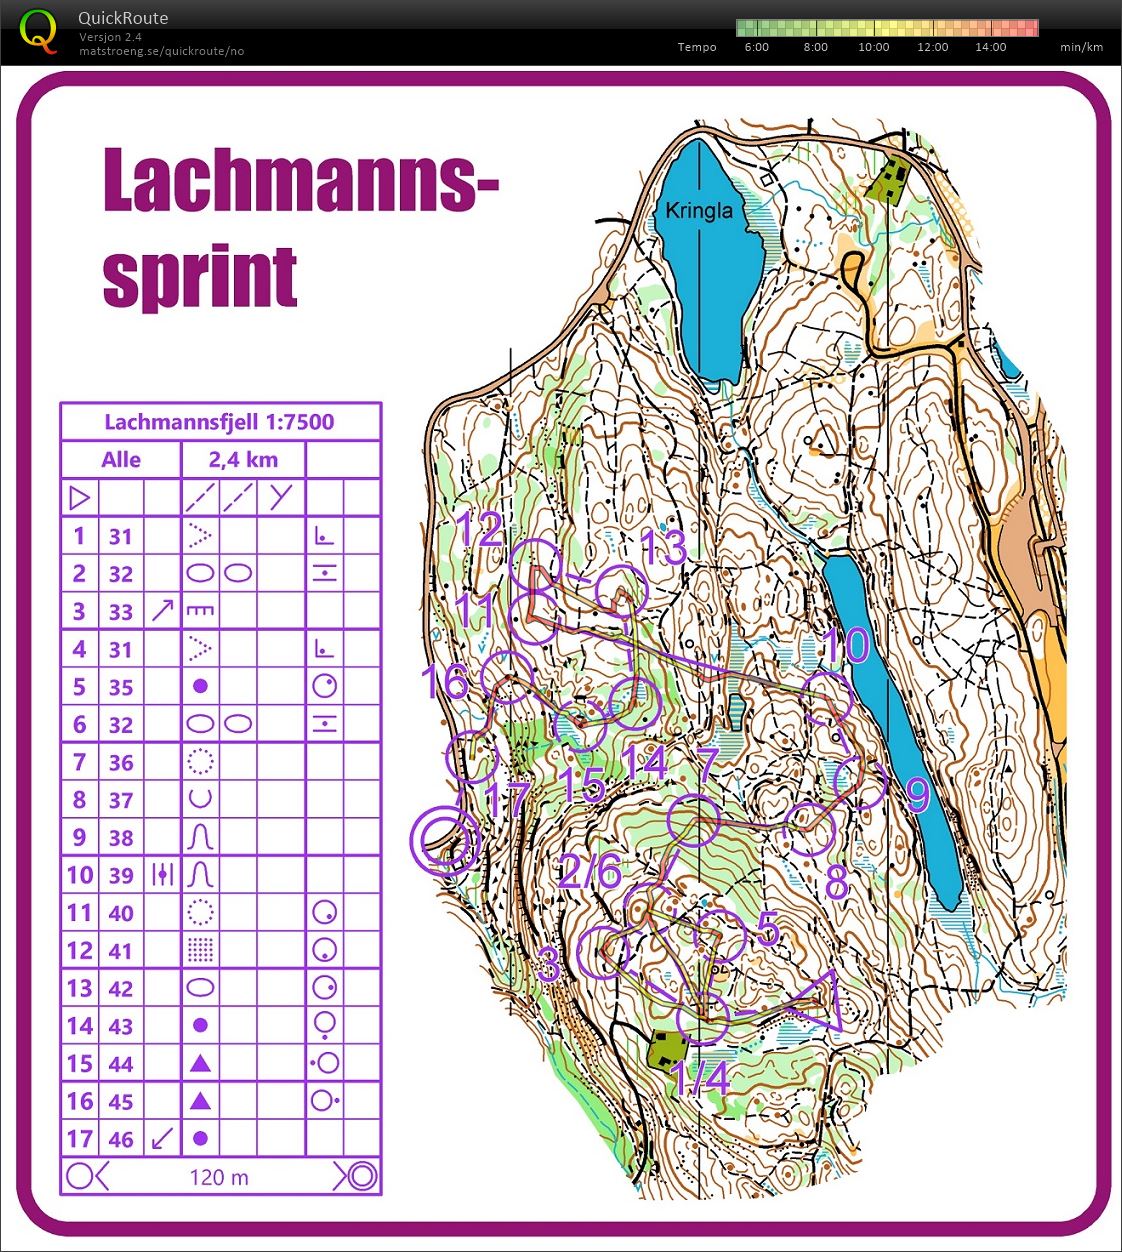 Lachmannssprint (2020-02-25)